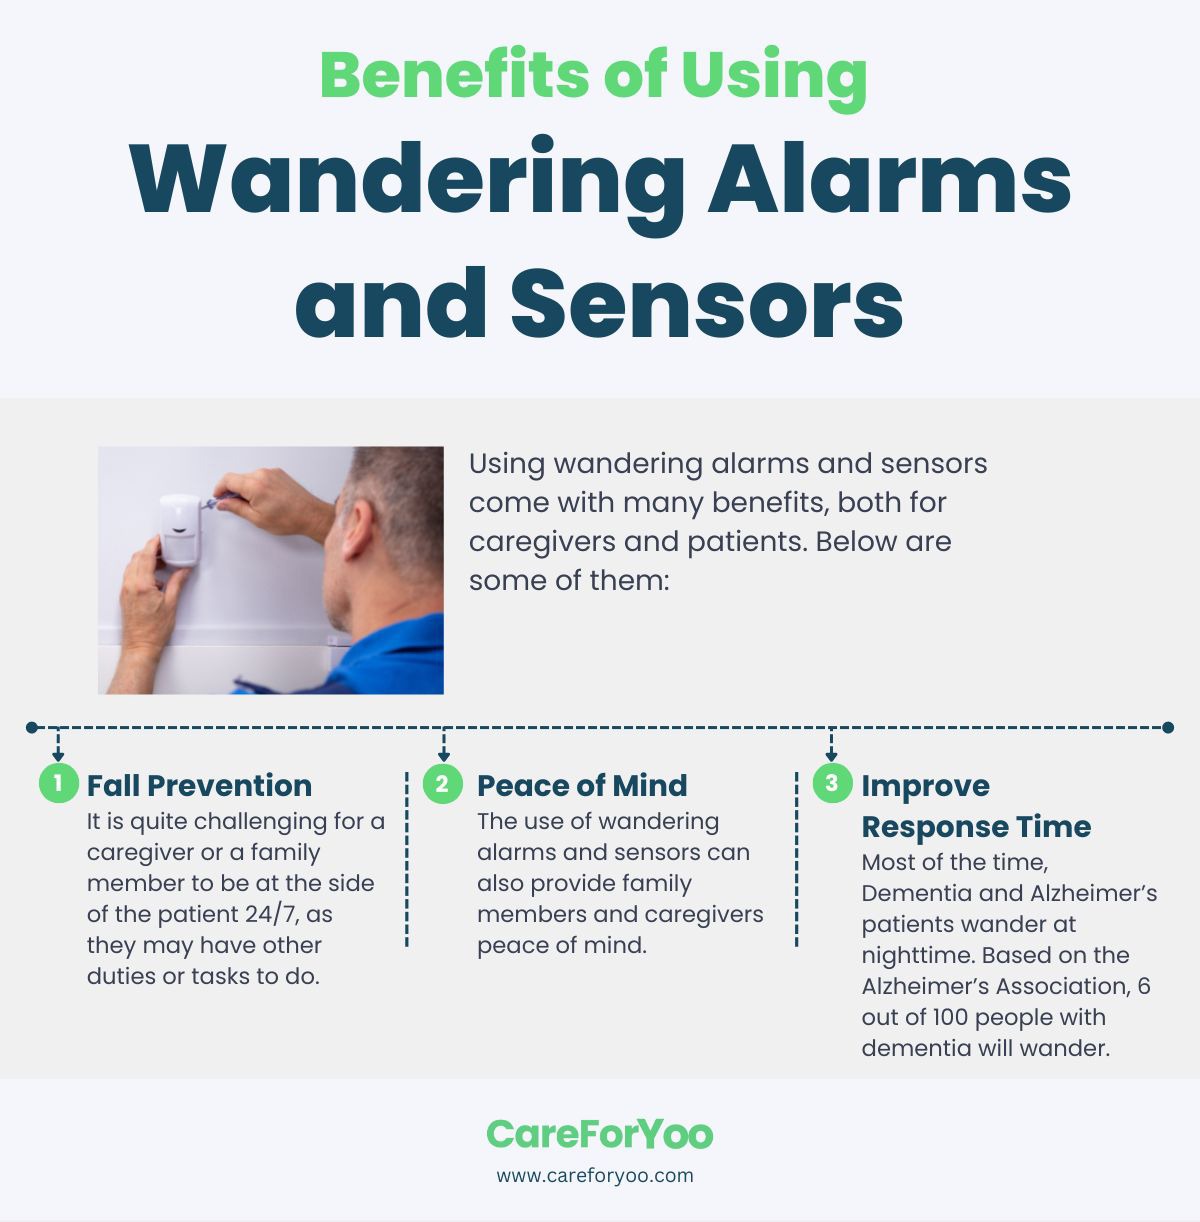 Benefits of Using Wandering Alarms and Sensors